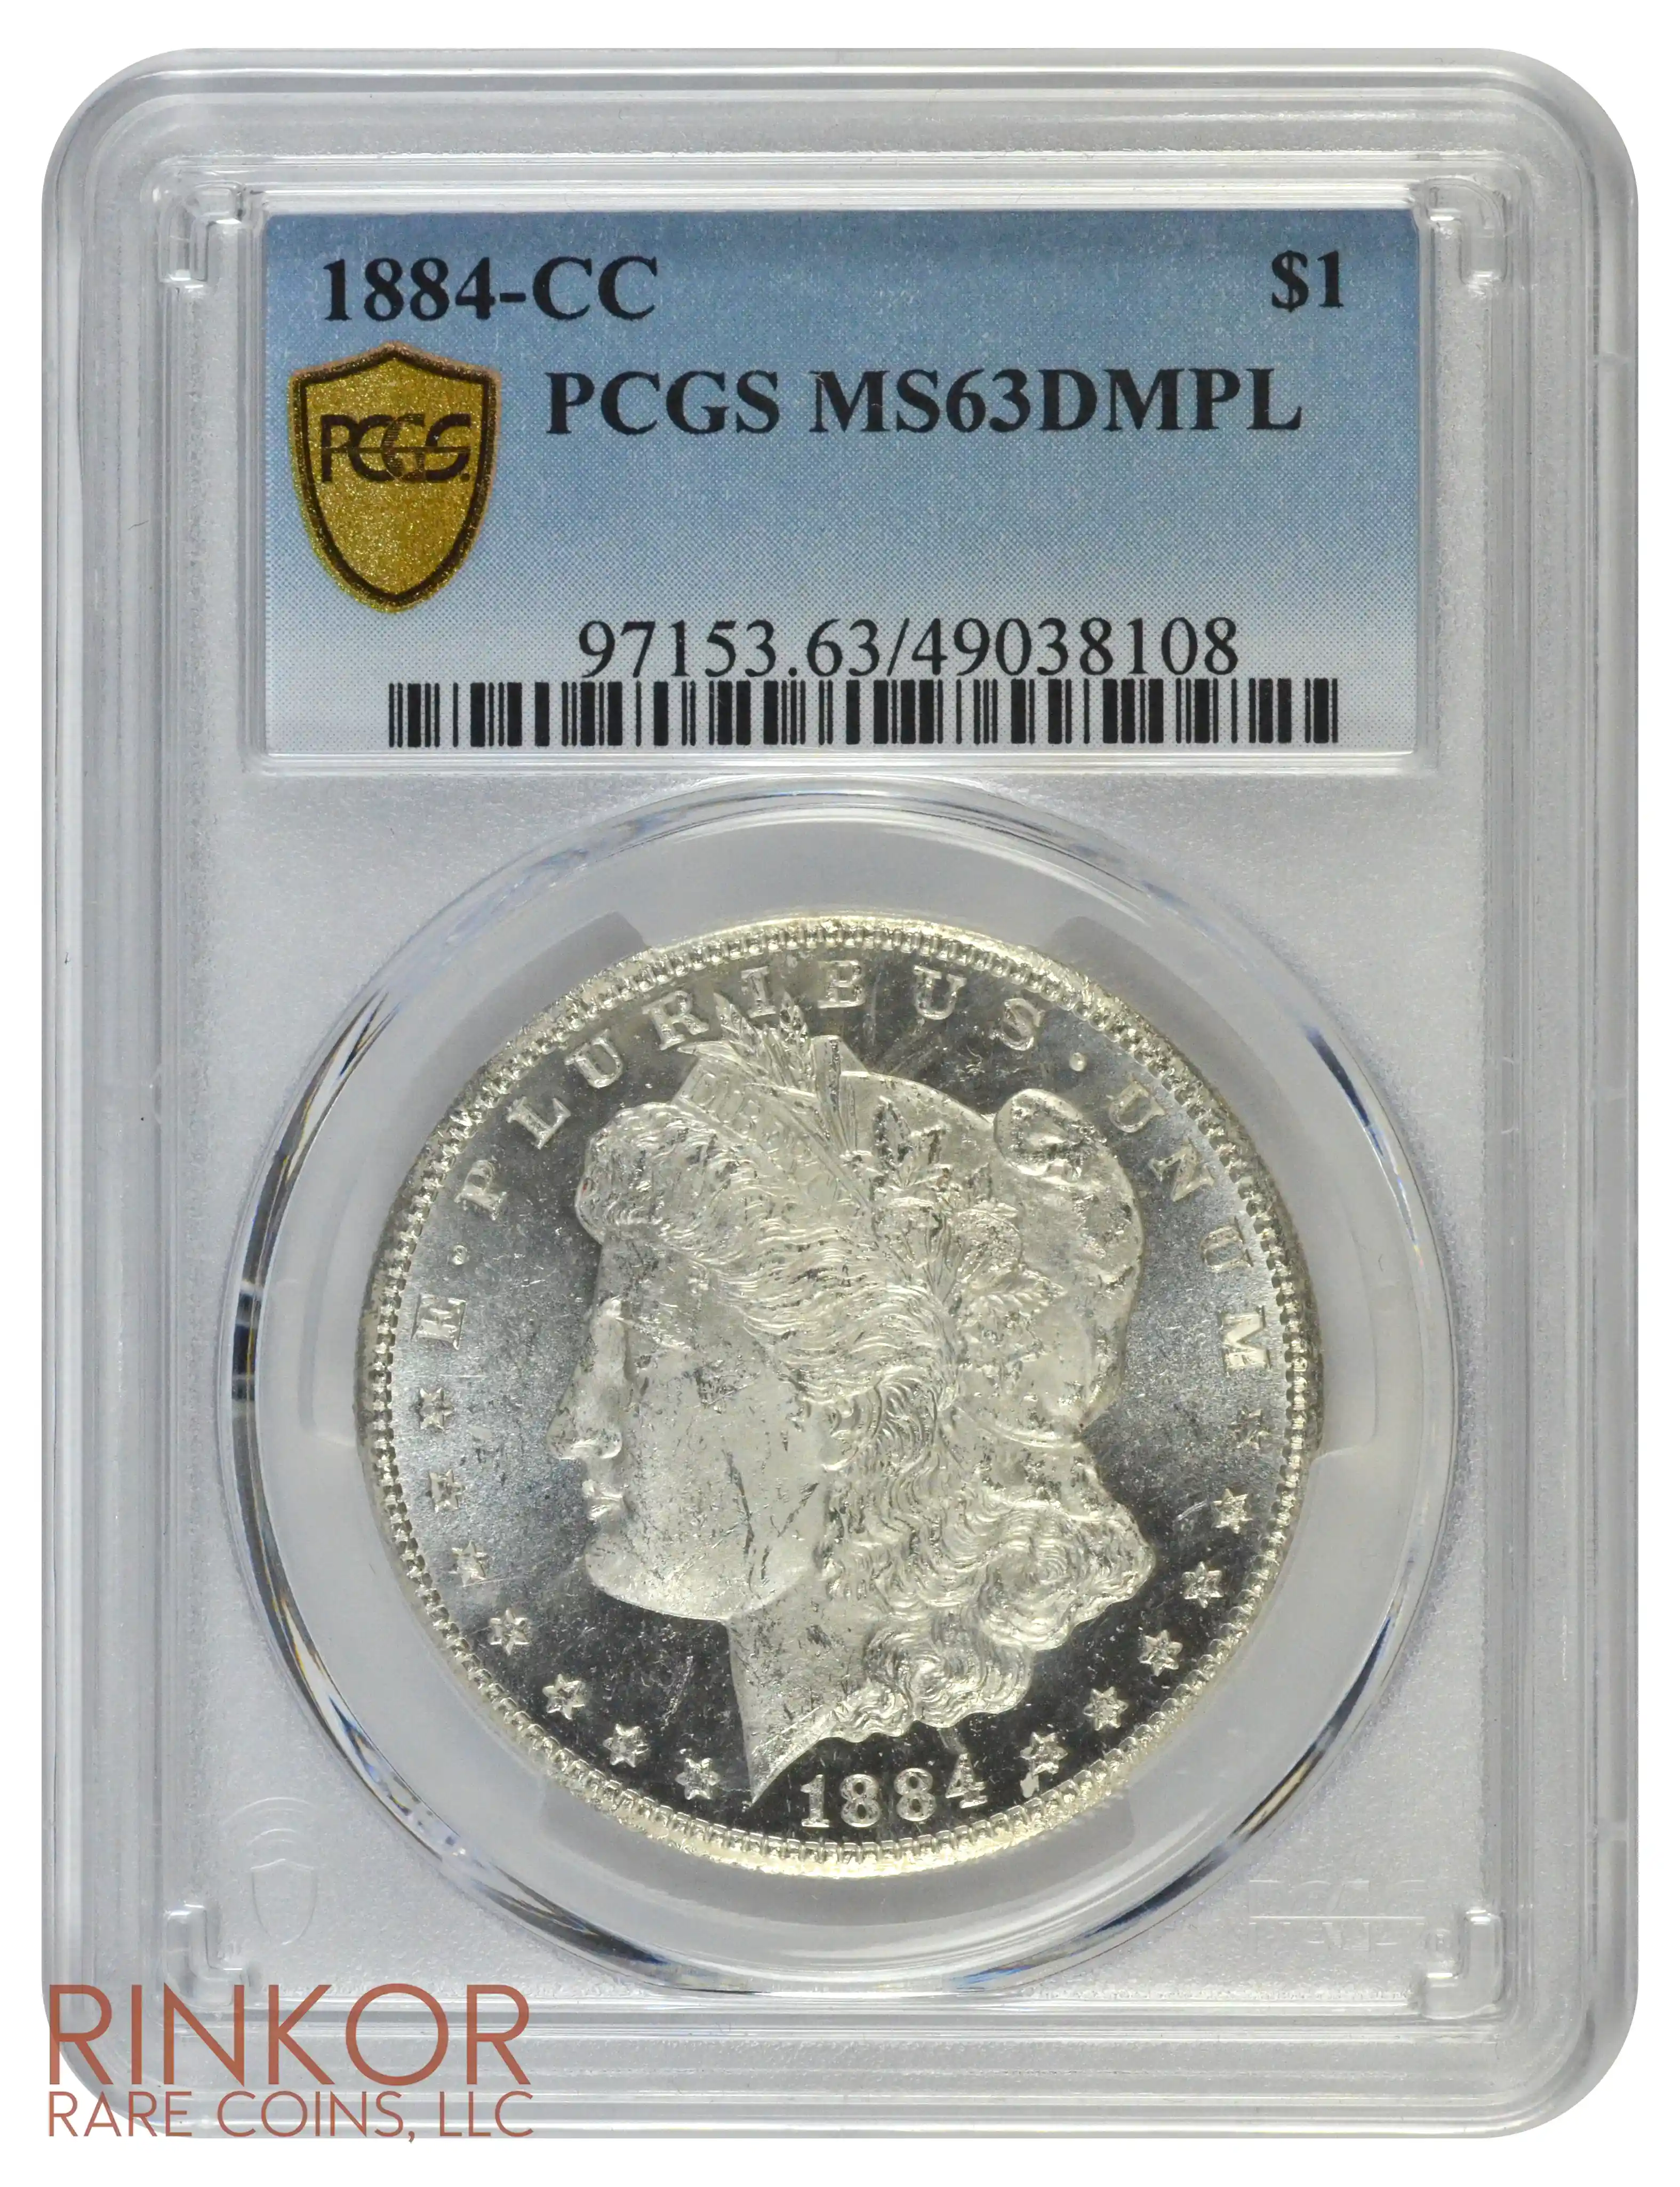 1884-CC $1 PCGS MS 63 DMPL 